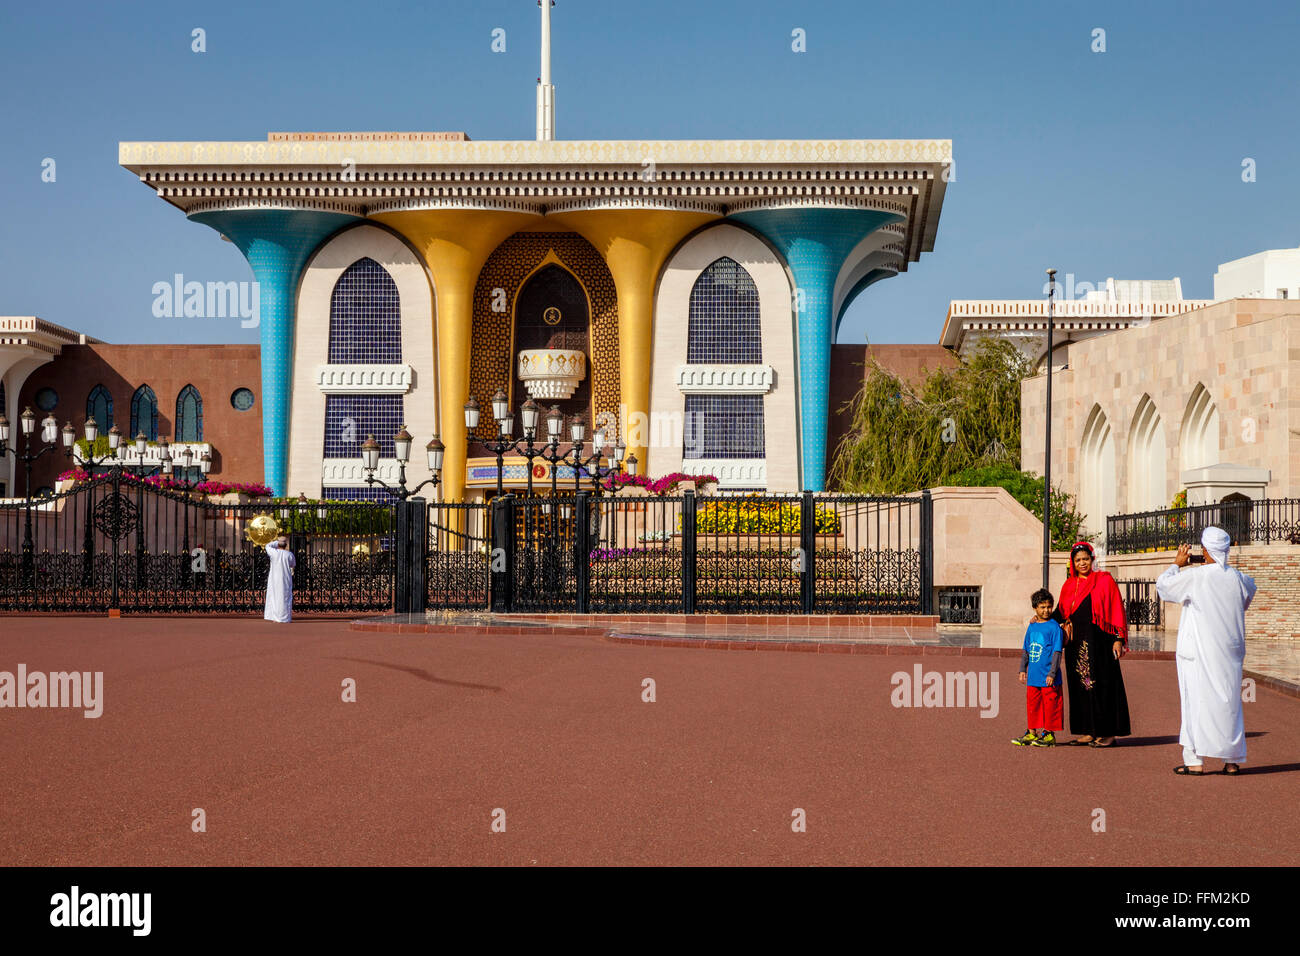 Al-Alam-Palast (Palast des Sultans) Muscat, Sultanat von Oman Stockfoto